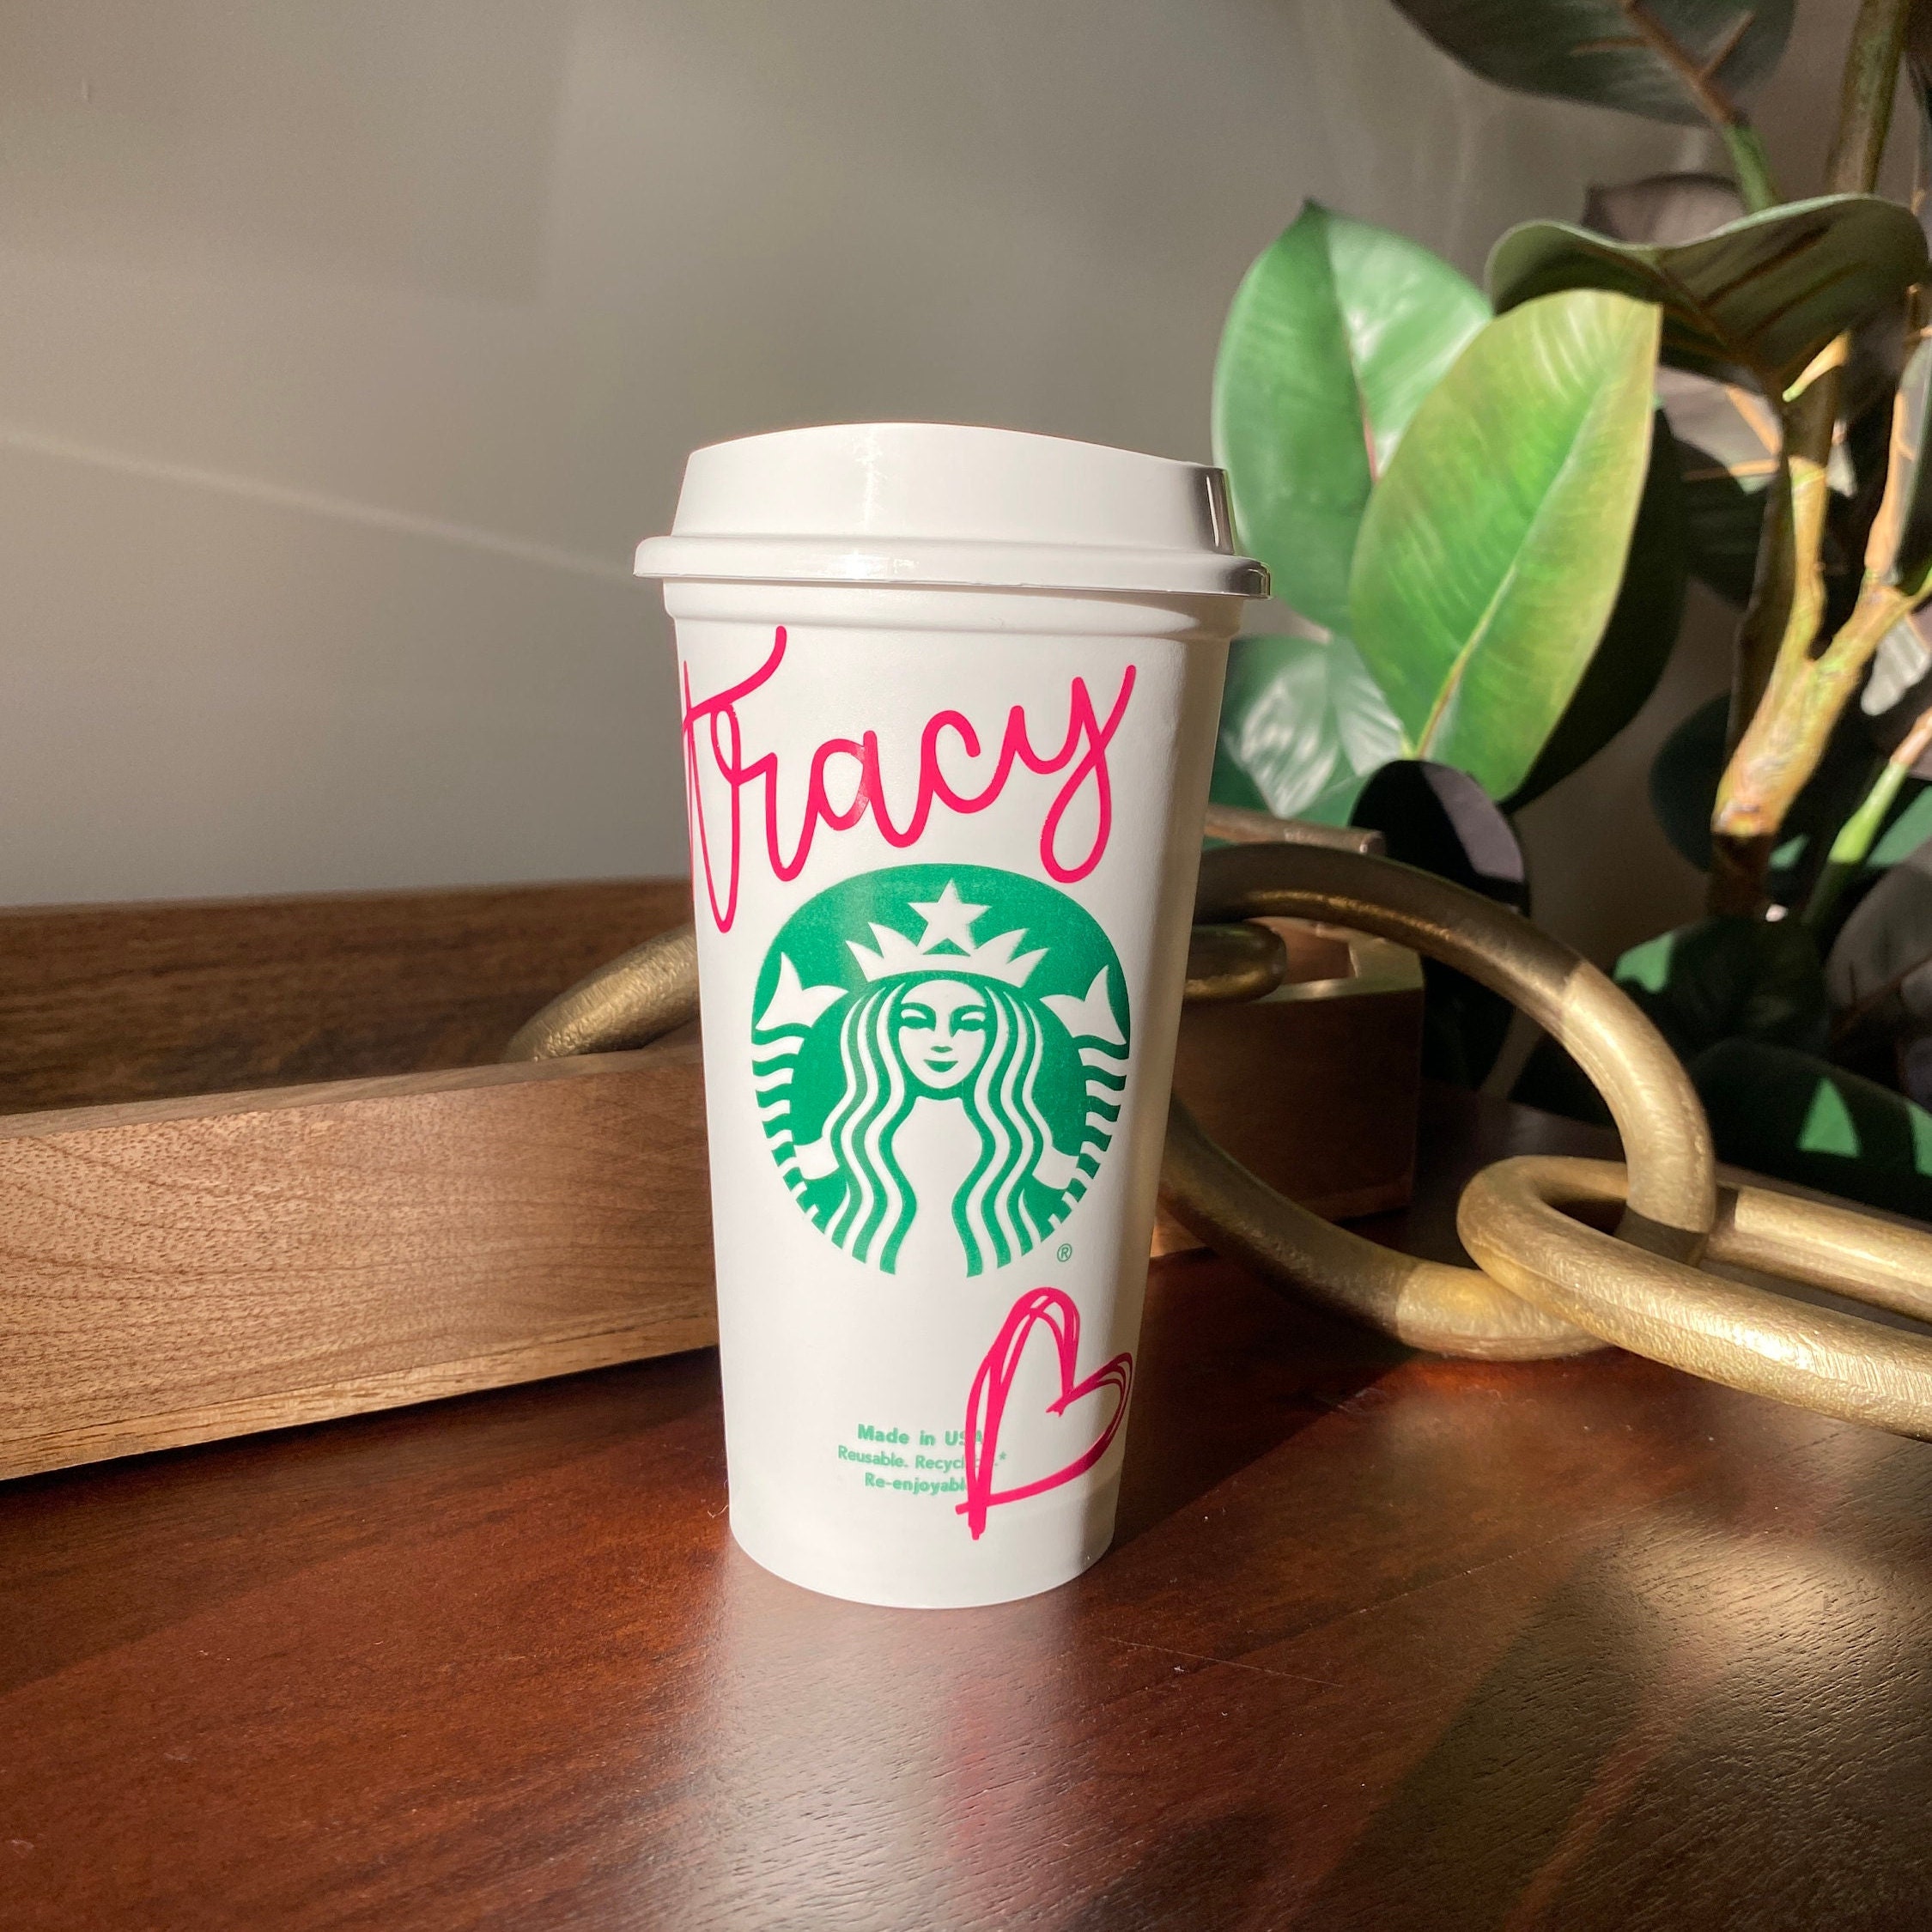 Customized Rad Tech Fuel Starbucks Reusable Grande Hot Cup - DecalCustom